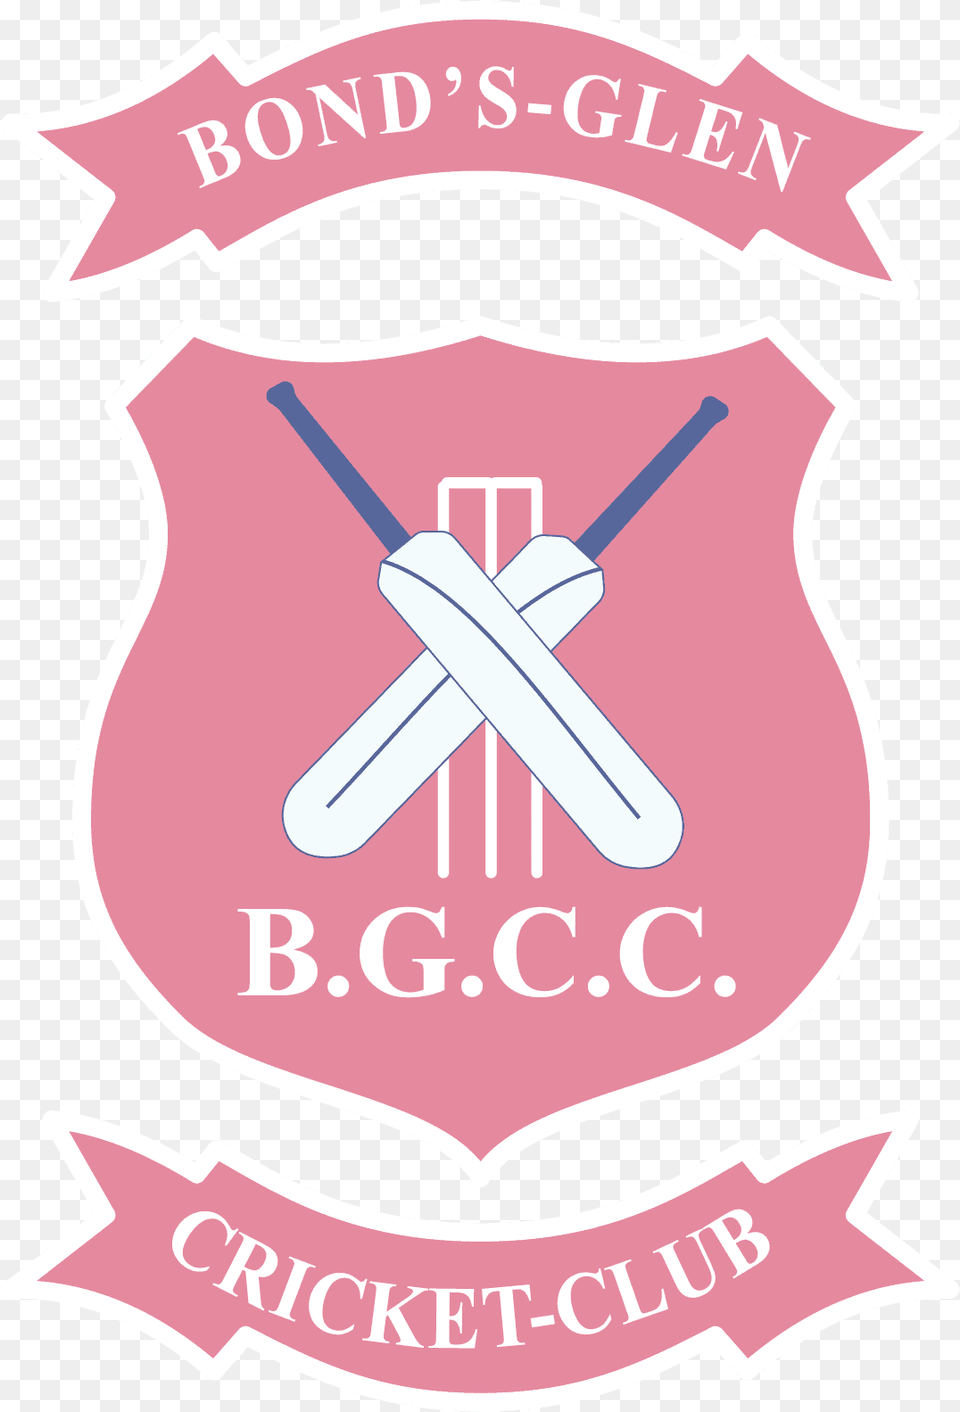 Bonds Glen Cricket Club, Logo, Badge, Symbol, Dynamite Free Png Download